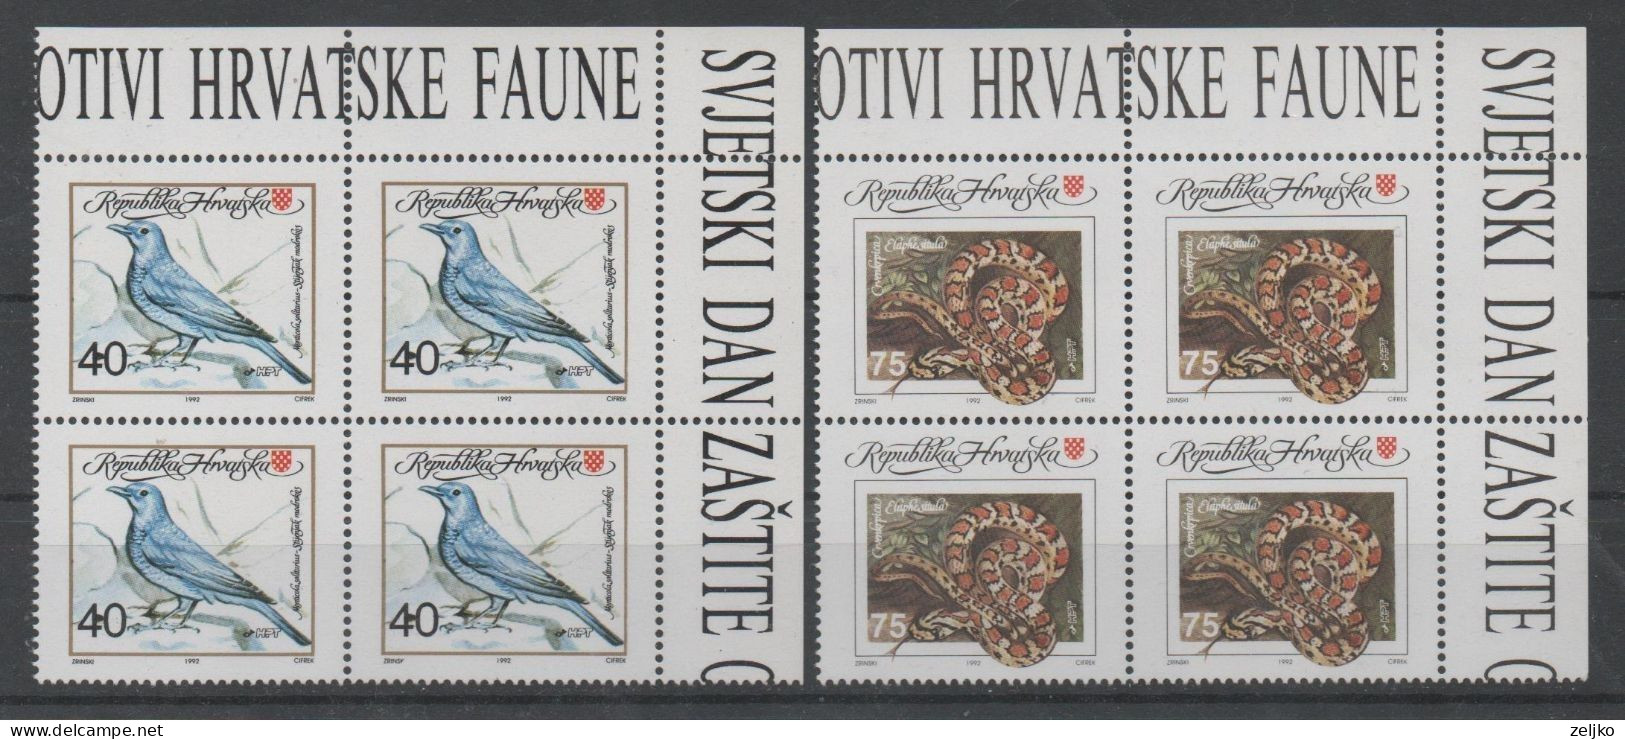 *** Croatia 1992, MNH, Michel 207 - 208, Fauna, Bird, Snake, World Environment Day, 2 Blocks Of 4 Stamps - Kroatië